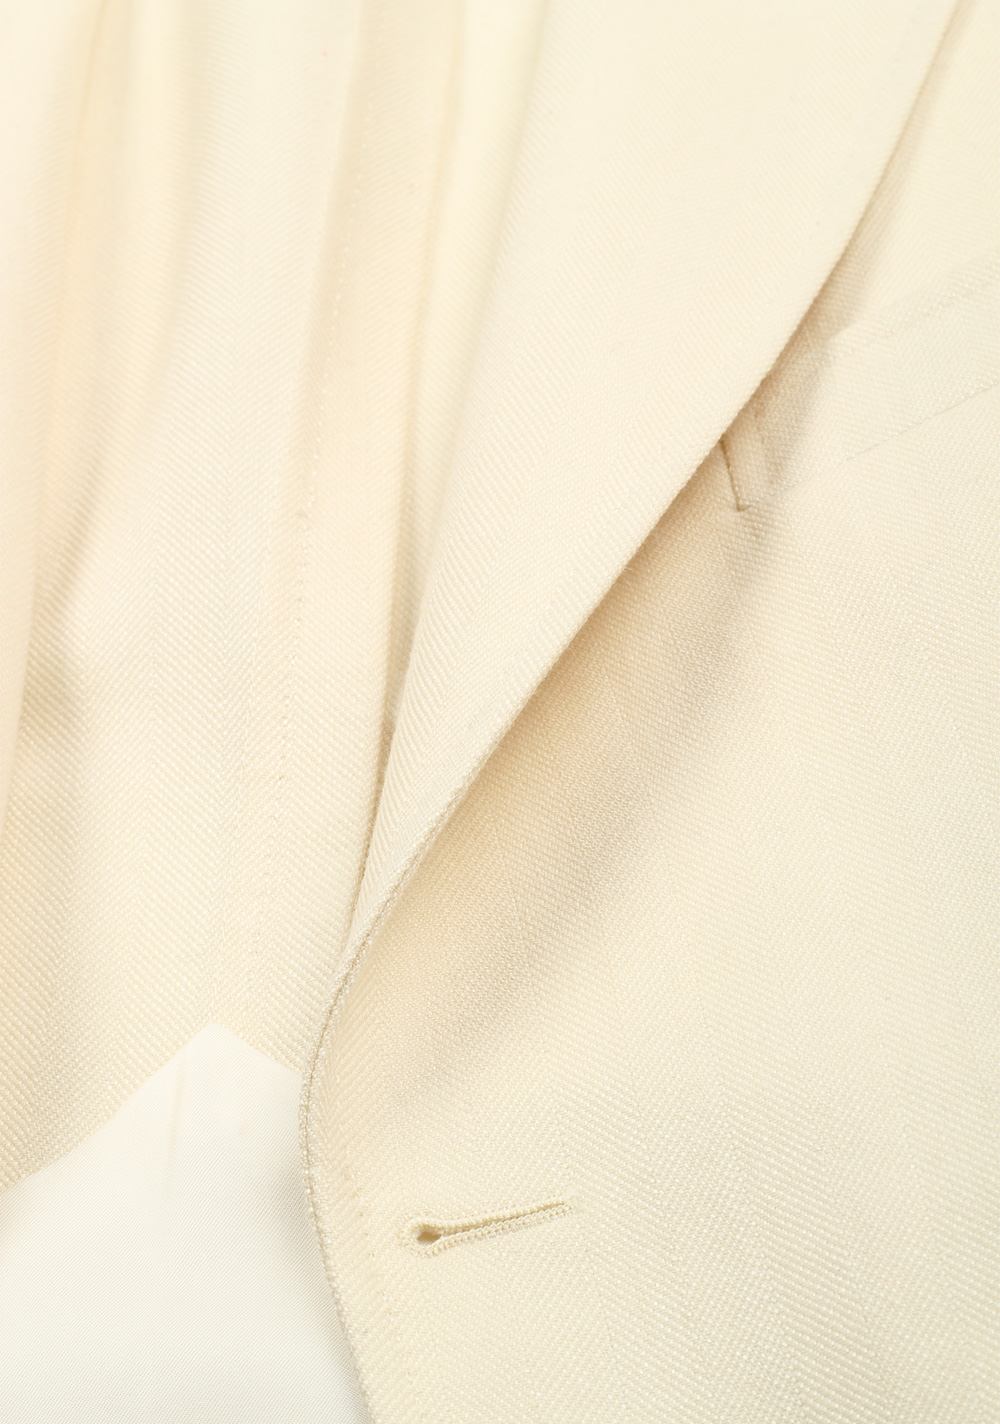 TOM FORD Shelton Off White Sport Coat Size Size 48C / 38S U.S. | Costume Limité